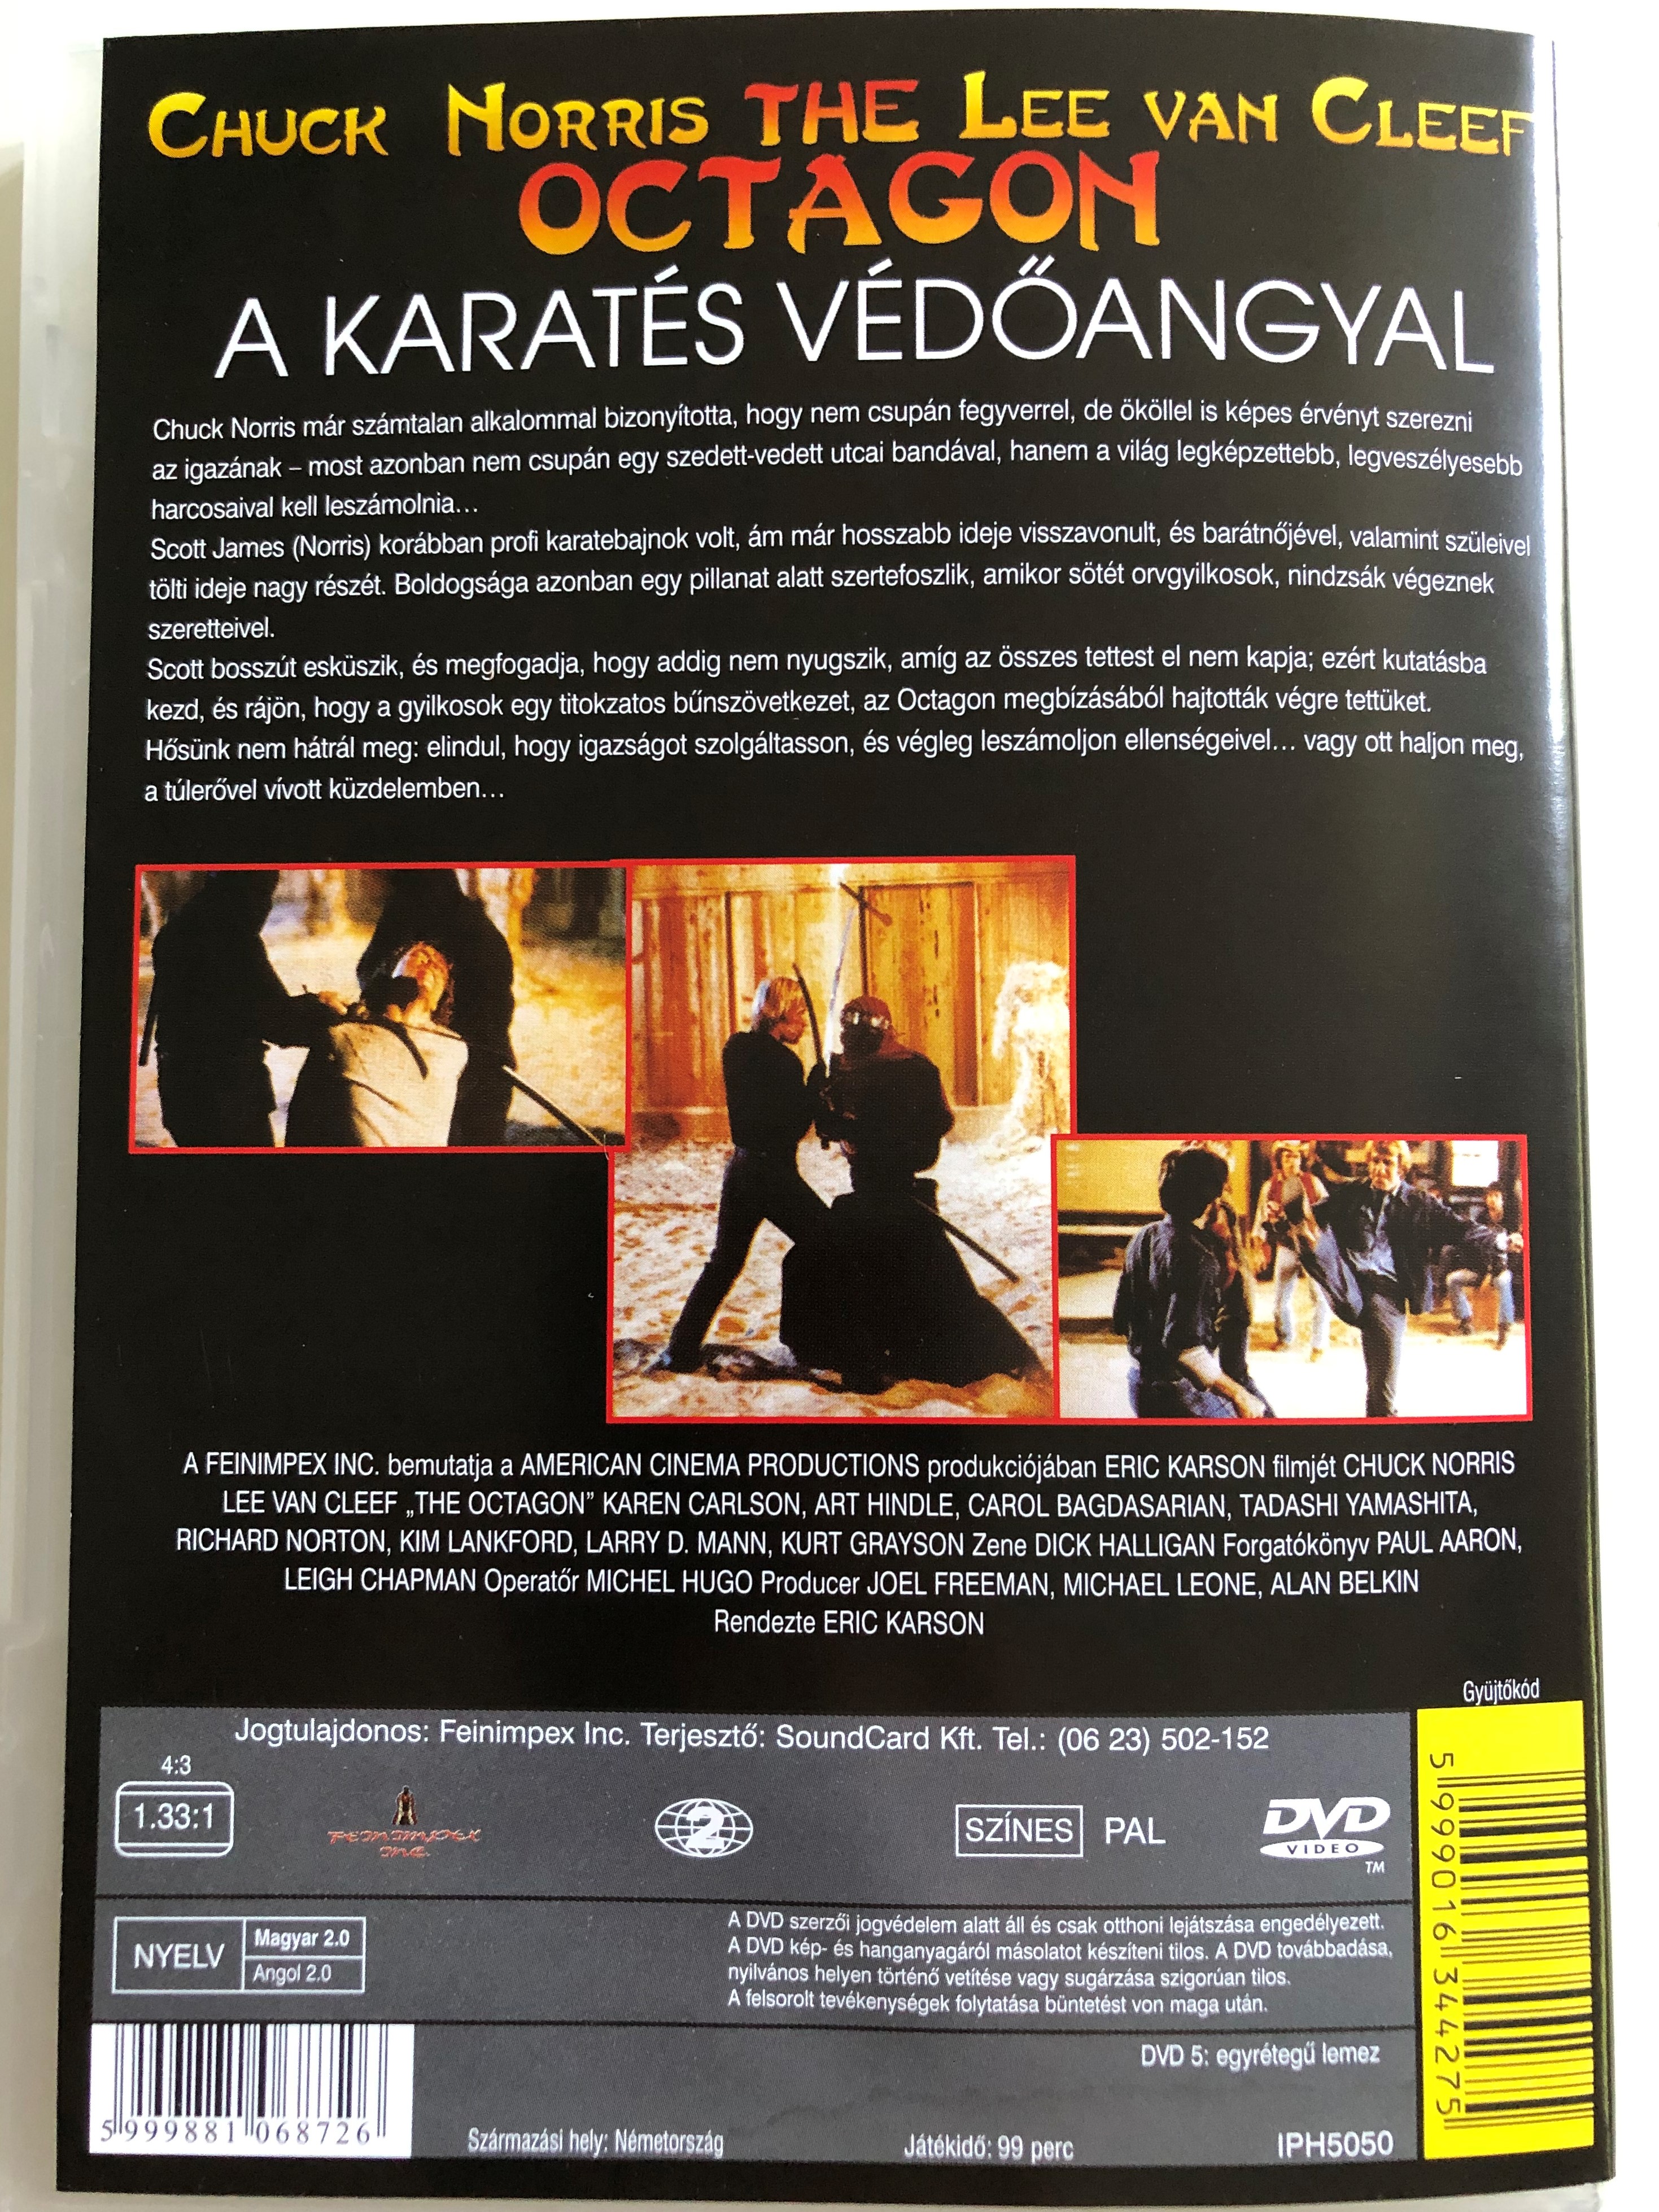 -the-octagon-dvd-1980-a-karat-s-v-d-angyal-directed-by-eric-karson-starring-chuck-norris-lee-van-cleef-karen-carlson-tadashi-yamashita-2-.jpg